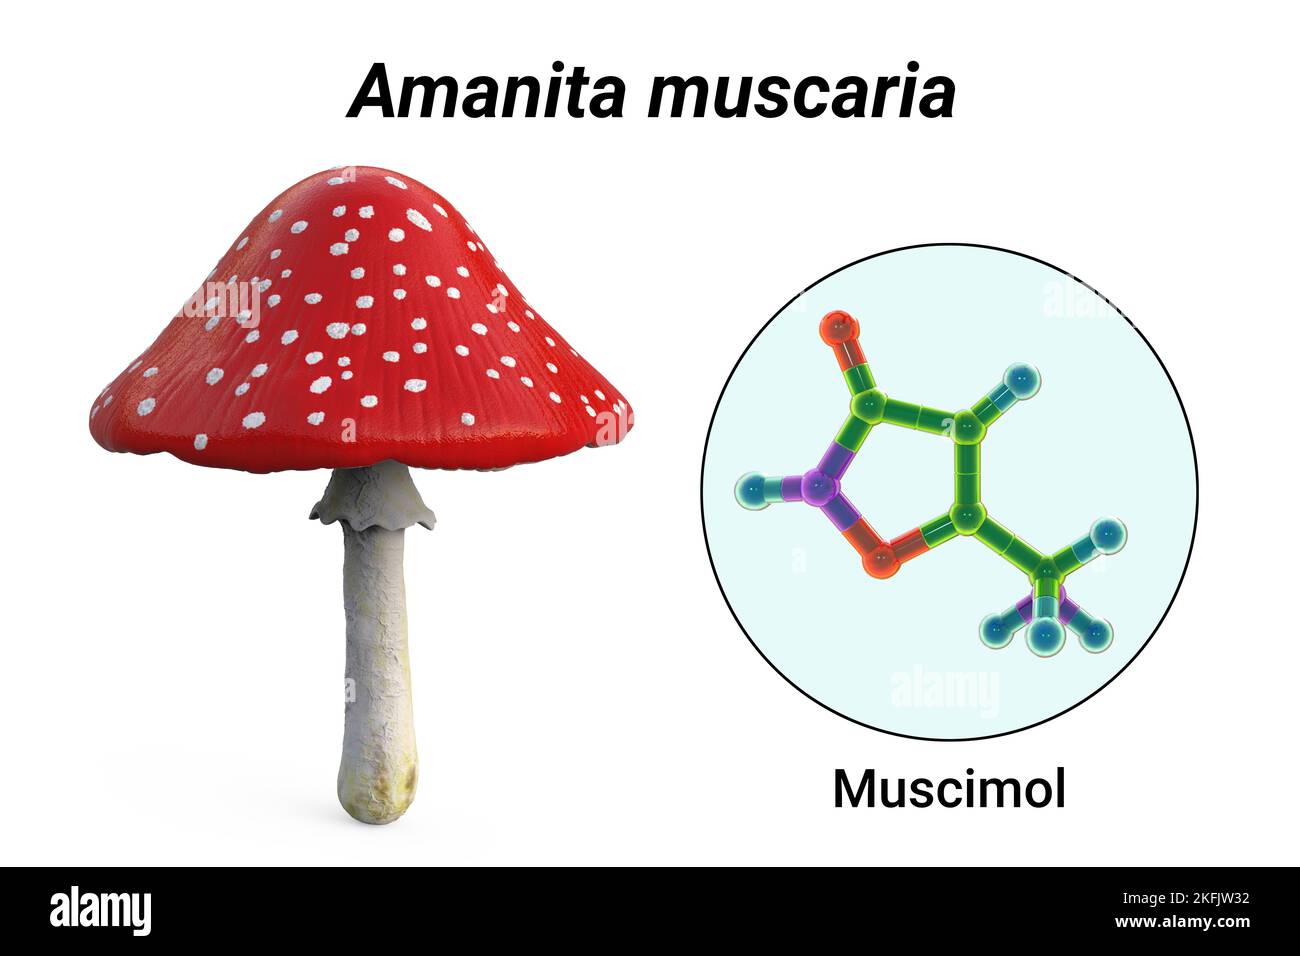 Fly agaric mushroom and muscimol toxin, illustration Stock Photo